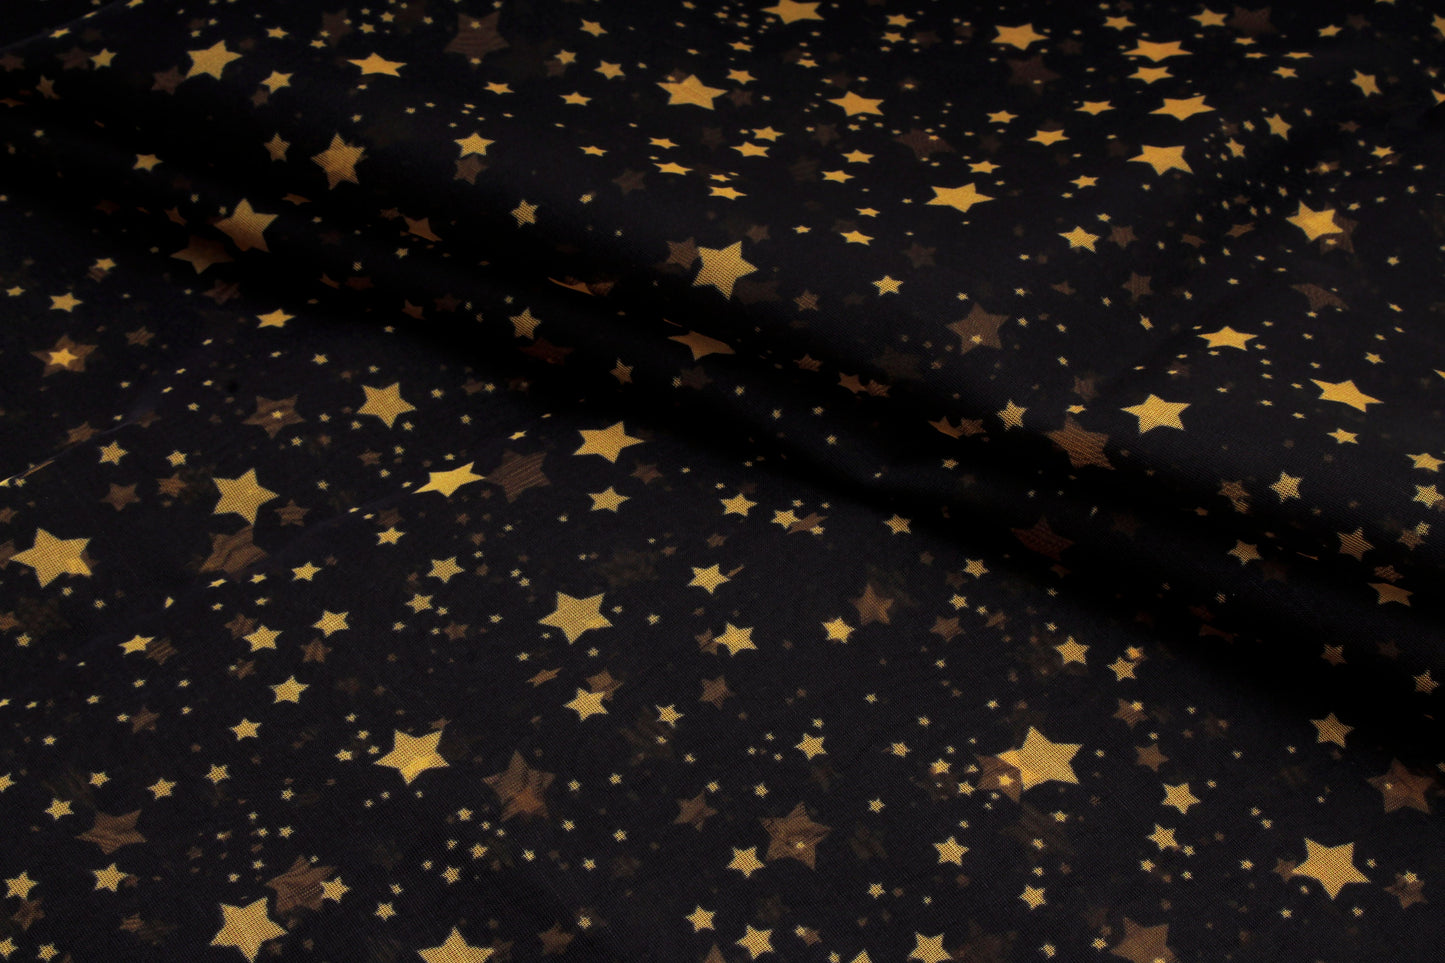 Black and Gold Star Print Organza Fabric